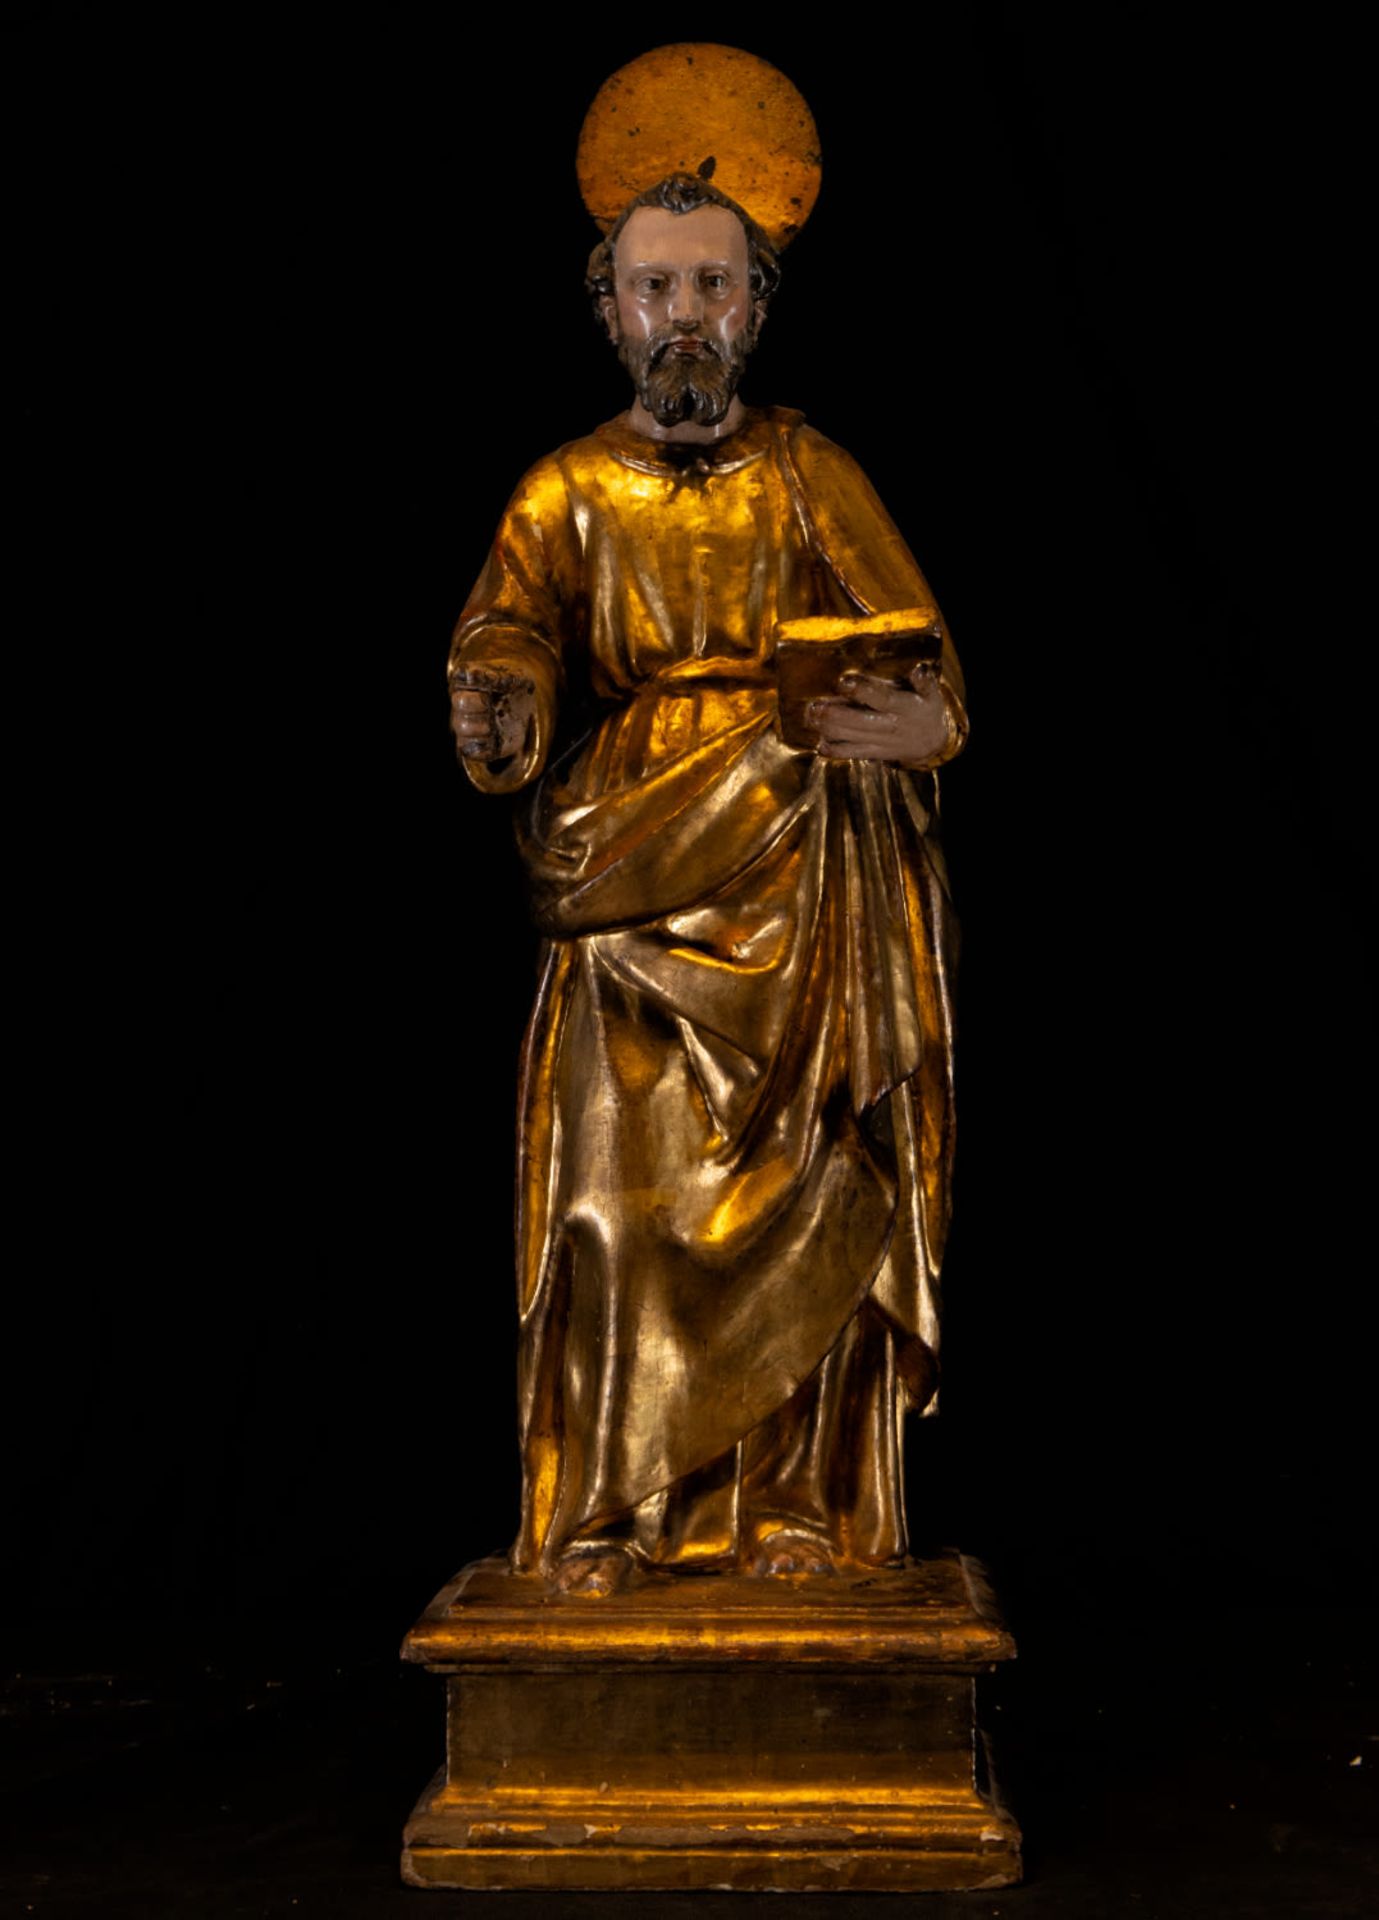 Sculpture of Saint Peter in gilded wood, Castilian school, 17th - 18th centuries